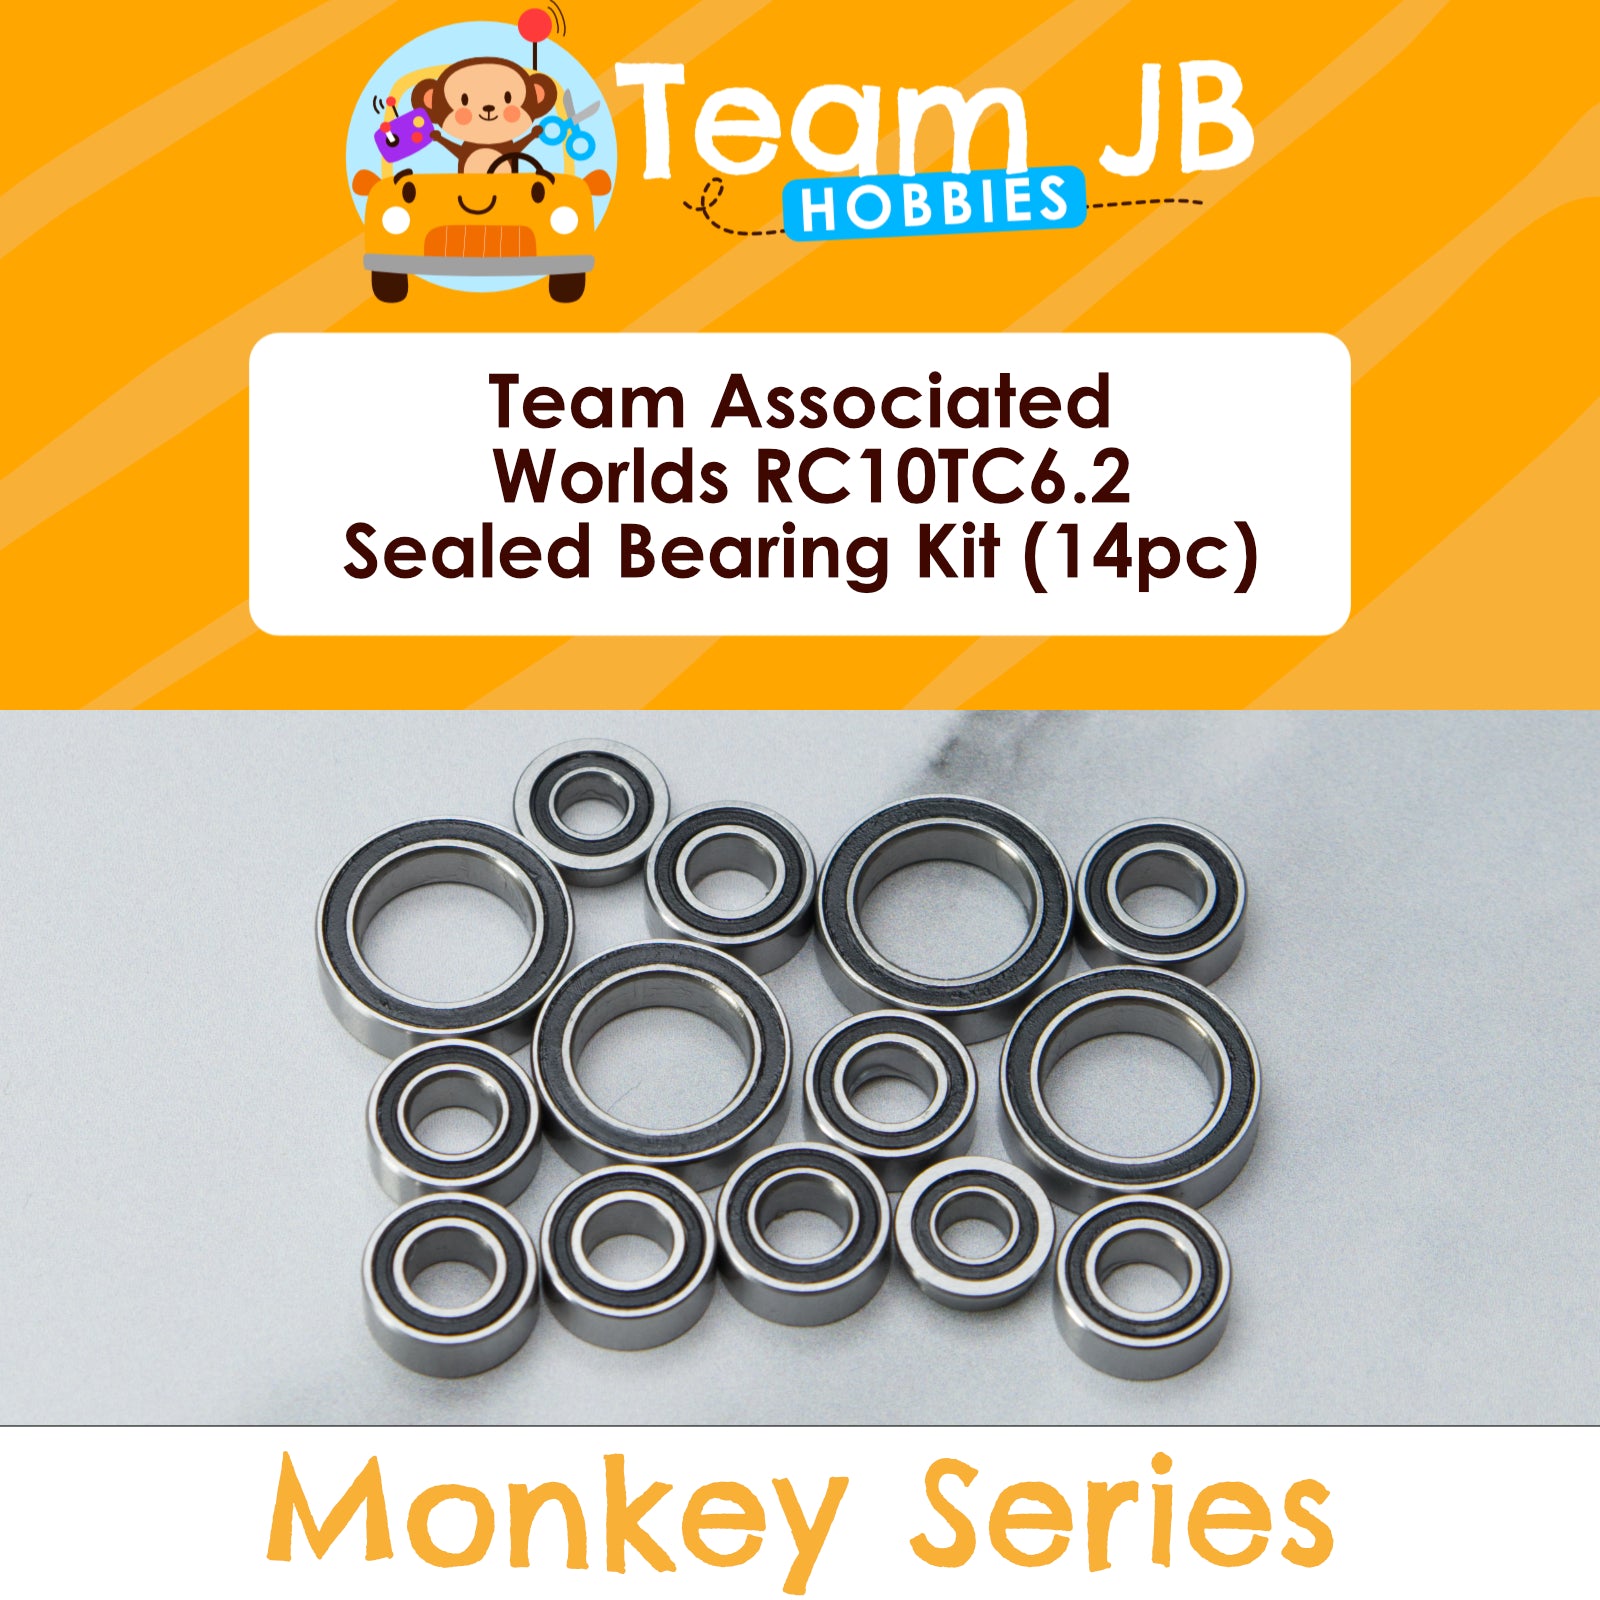 Team Associated Worlds RC10TC6.2 - Sealed Bearing Kit